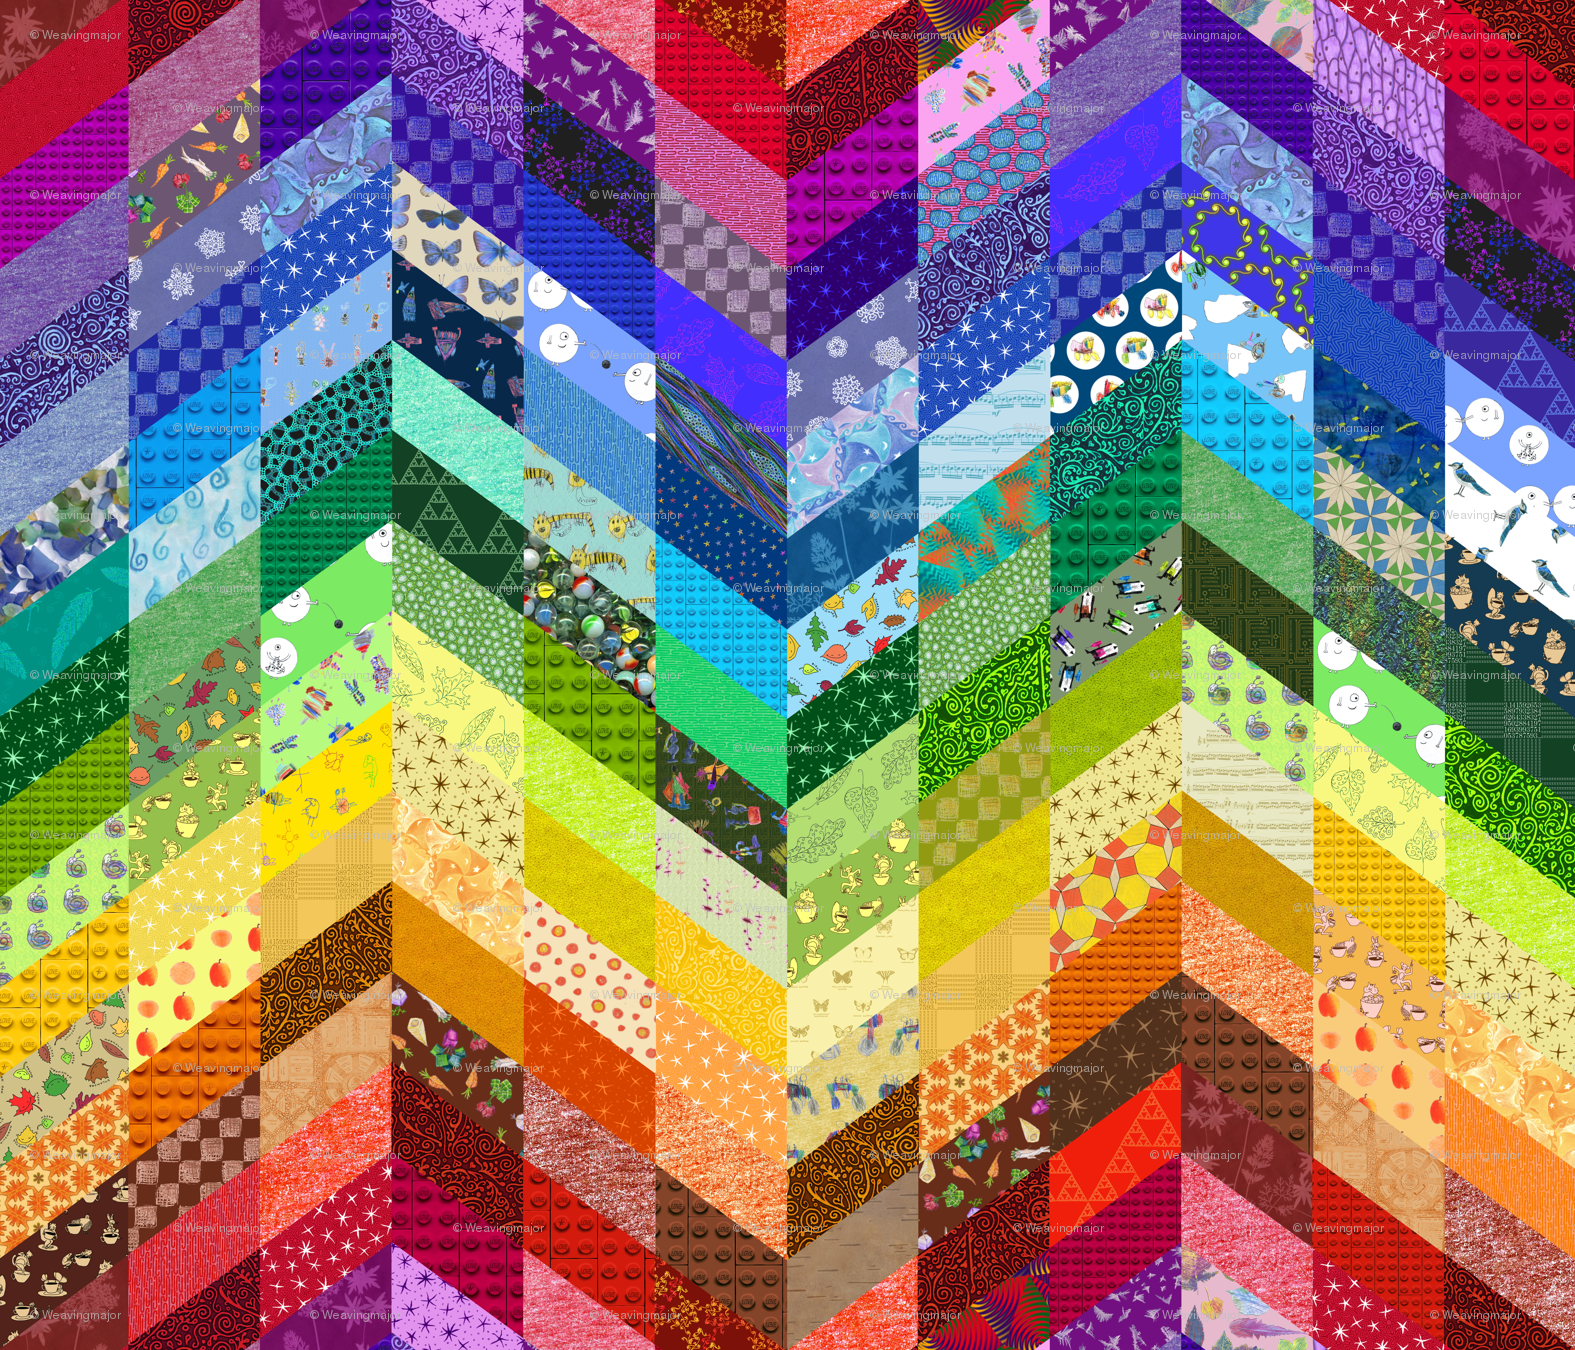 Quilt Wallpaper And Backgrounds Wallpapersafari HD Wallpapers Download Free Images Wallpaper [wallpaper981.blogspot.com]